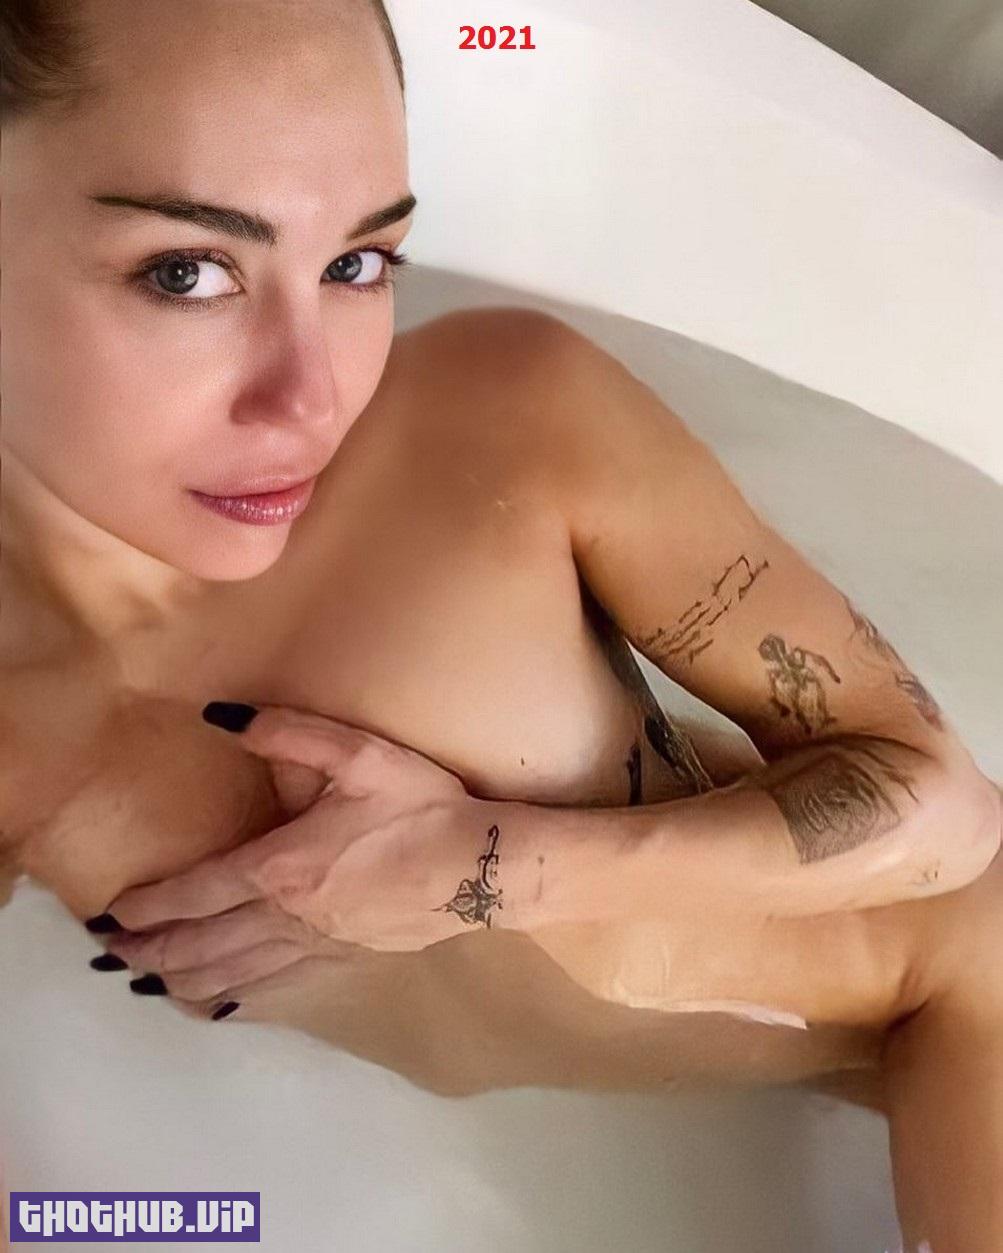 Miley Cyrus Nude In Bathtub 2021